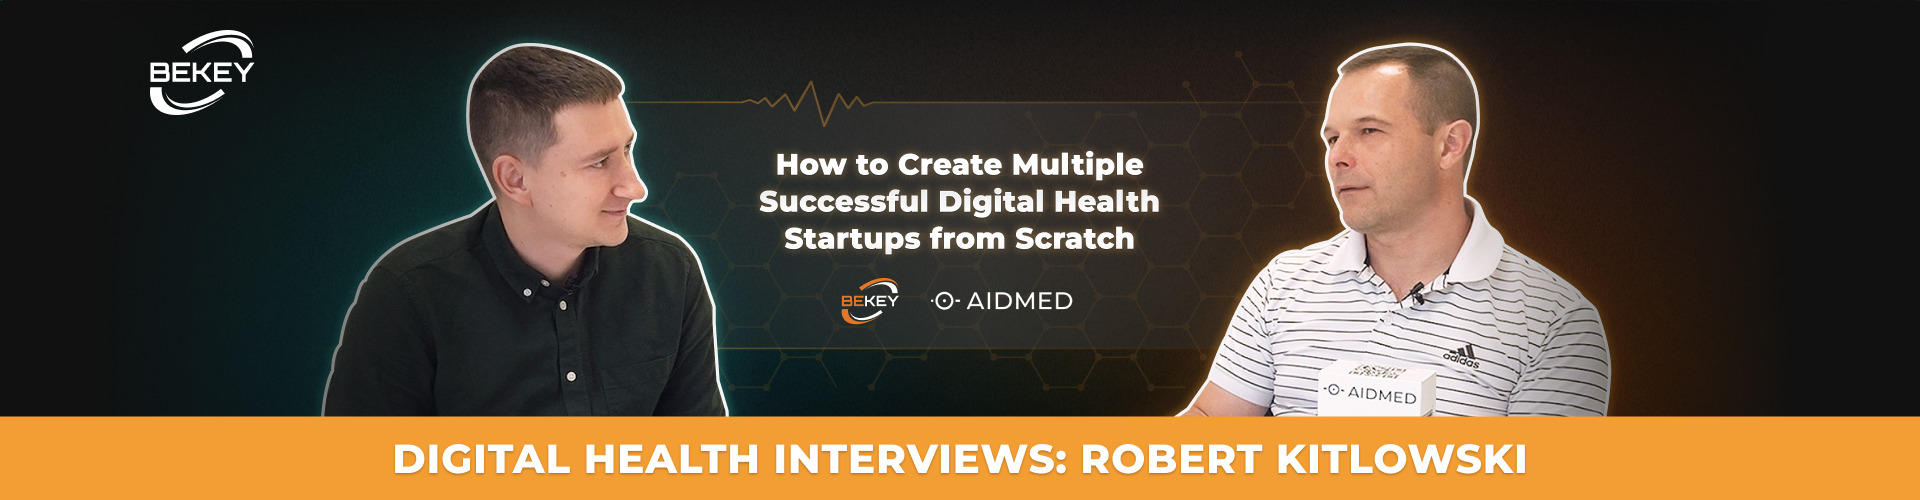 Digital Health Interviews: Robert Kitlowski. How to create digital health startups from scratch? - image